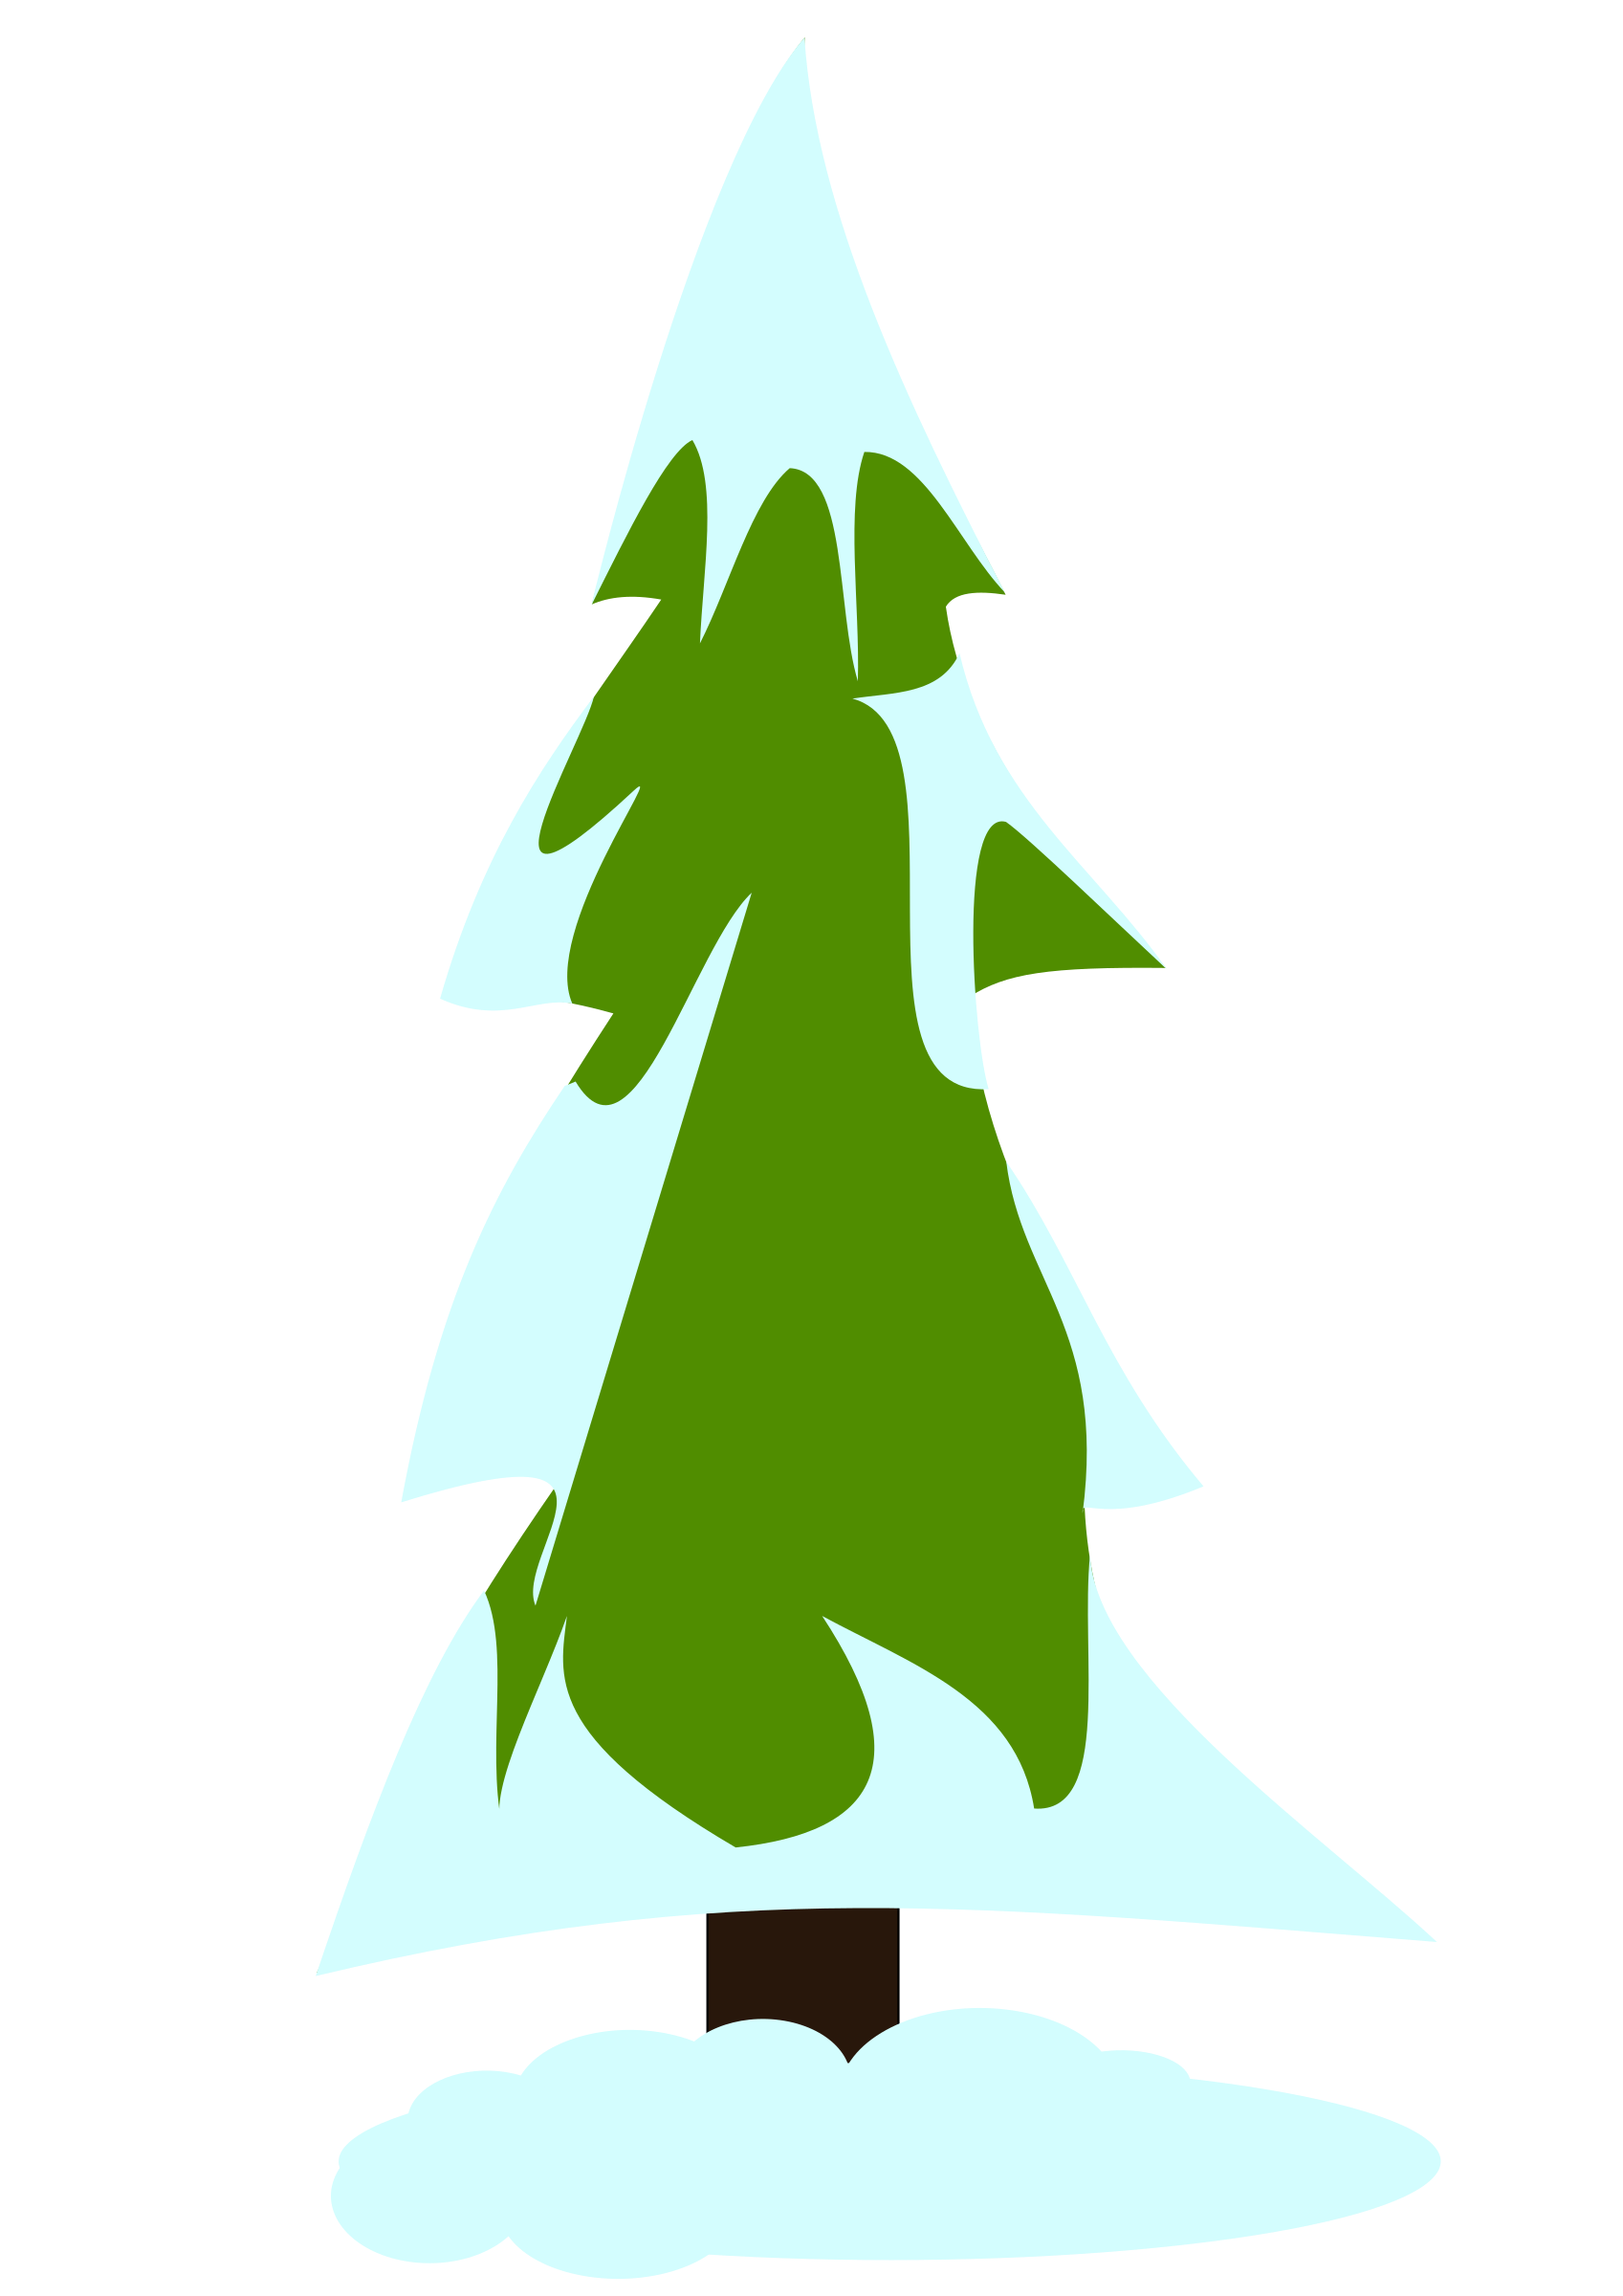 Clipart snow tree. Snowy pine big image